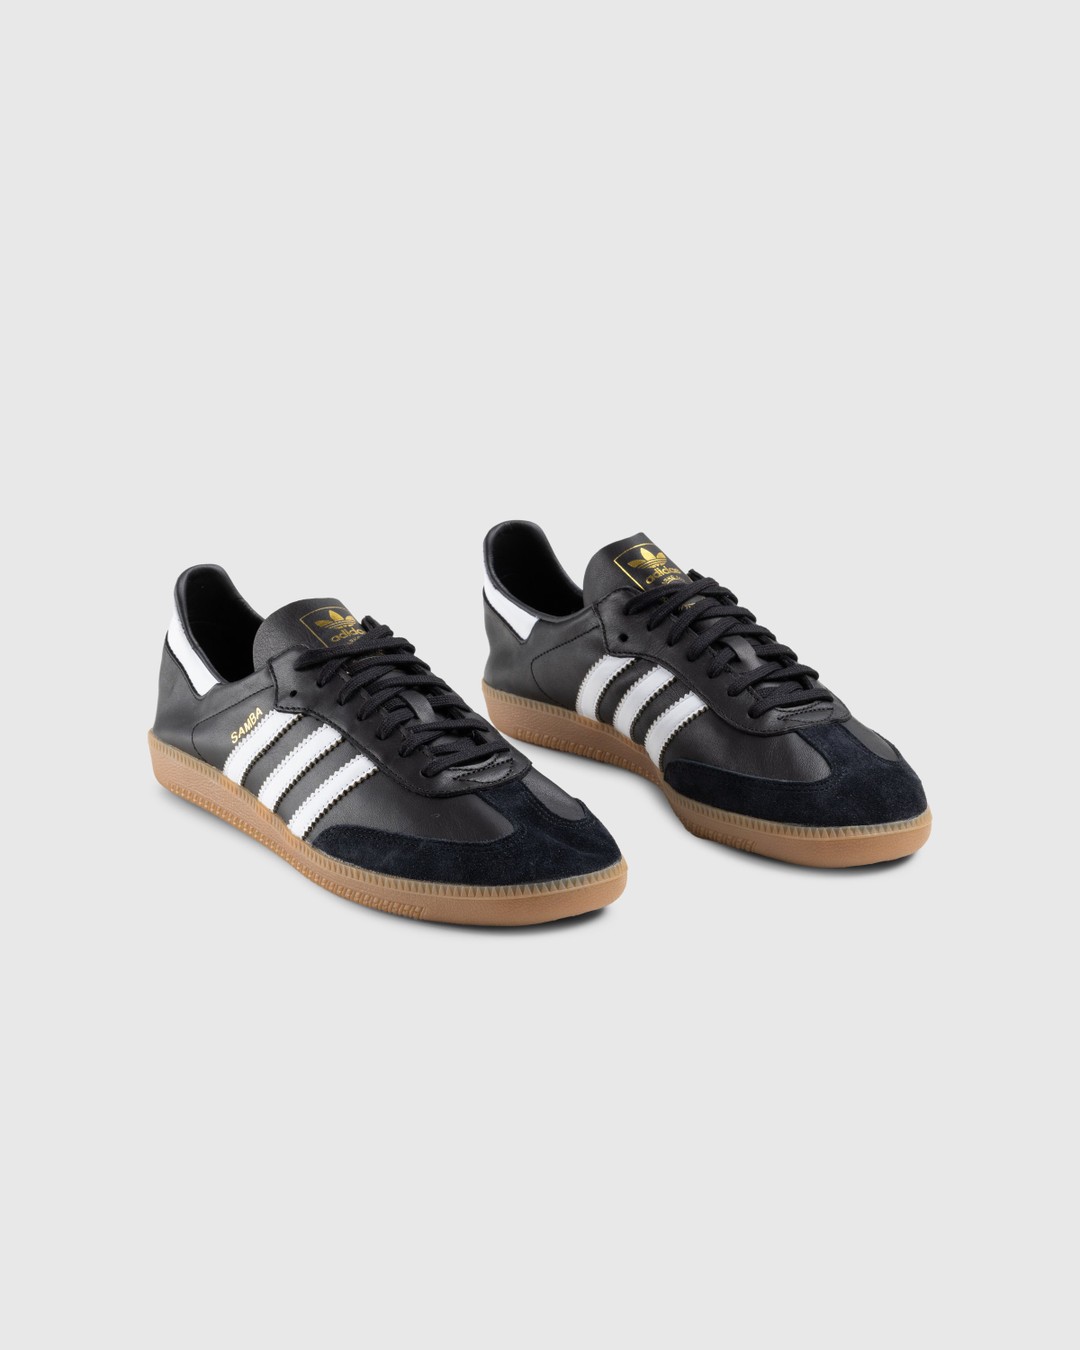 Adidas – Samba Decon Black Highsnobiety Shop